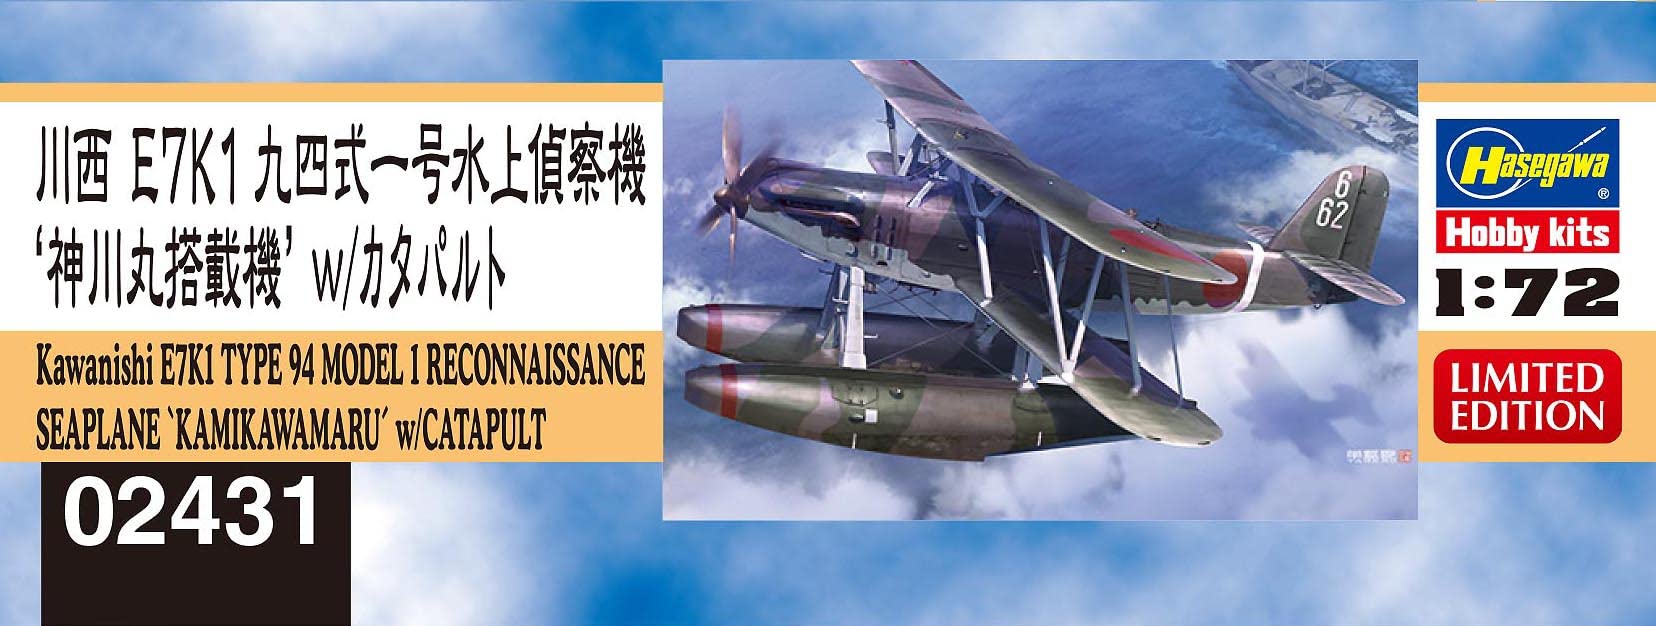 Hasegawa 1/72 Kawanishi E7K1 Type 94 Reconnaissance Aircraft Plastic Model Kit